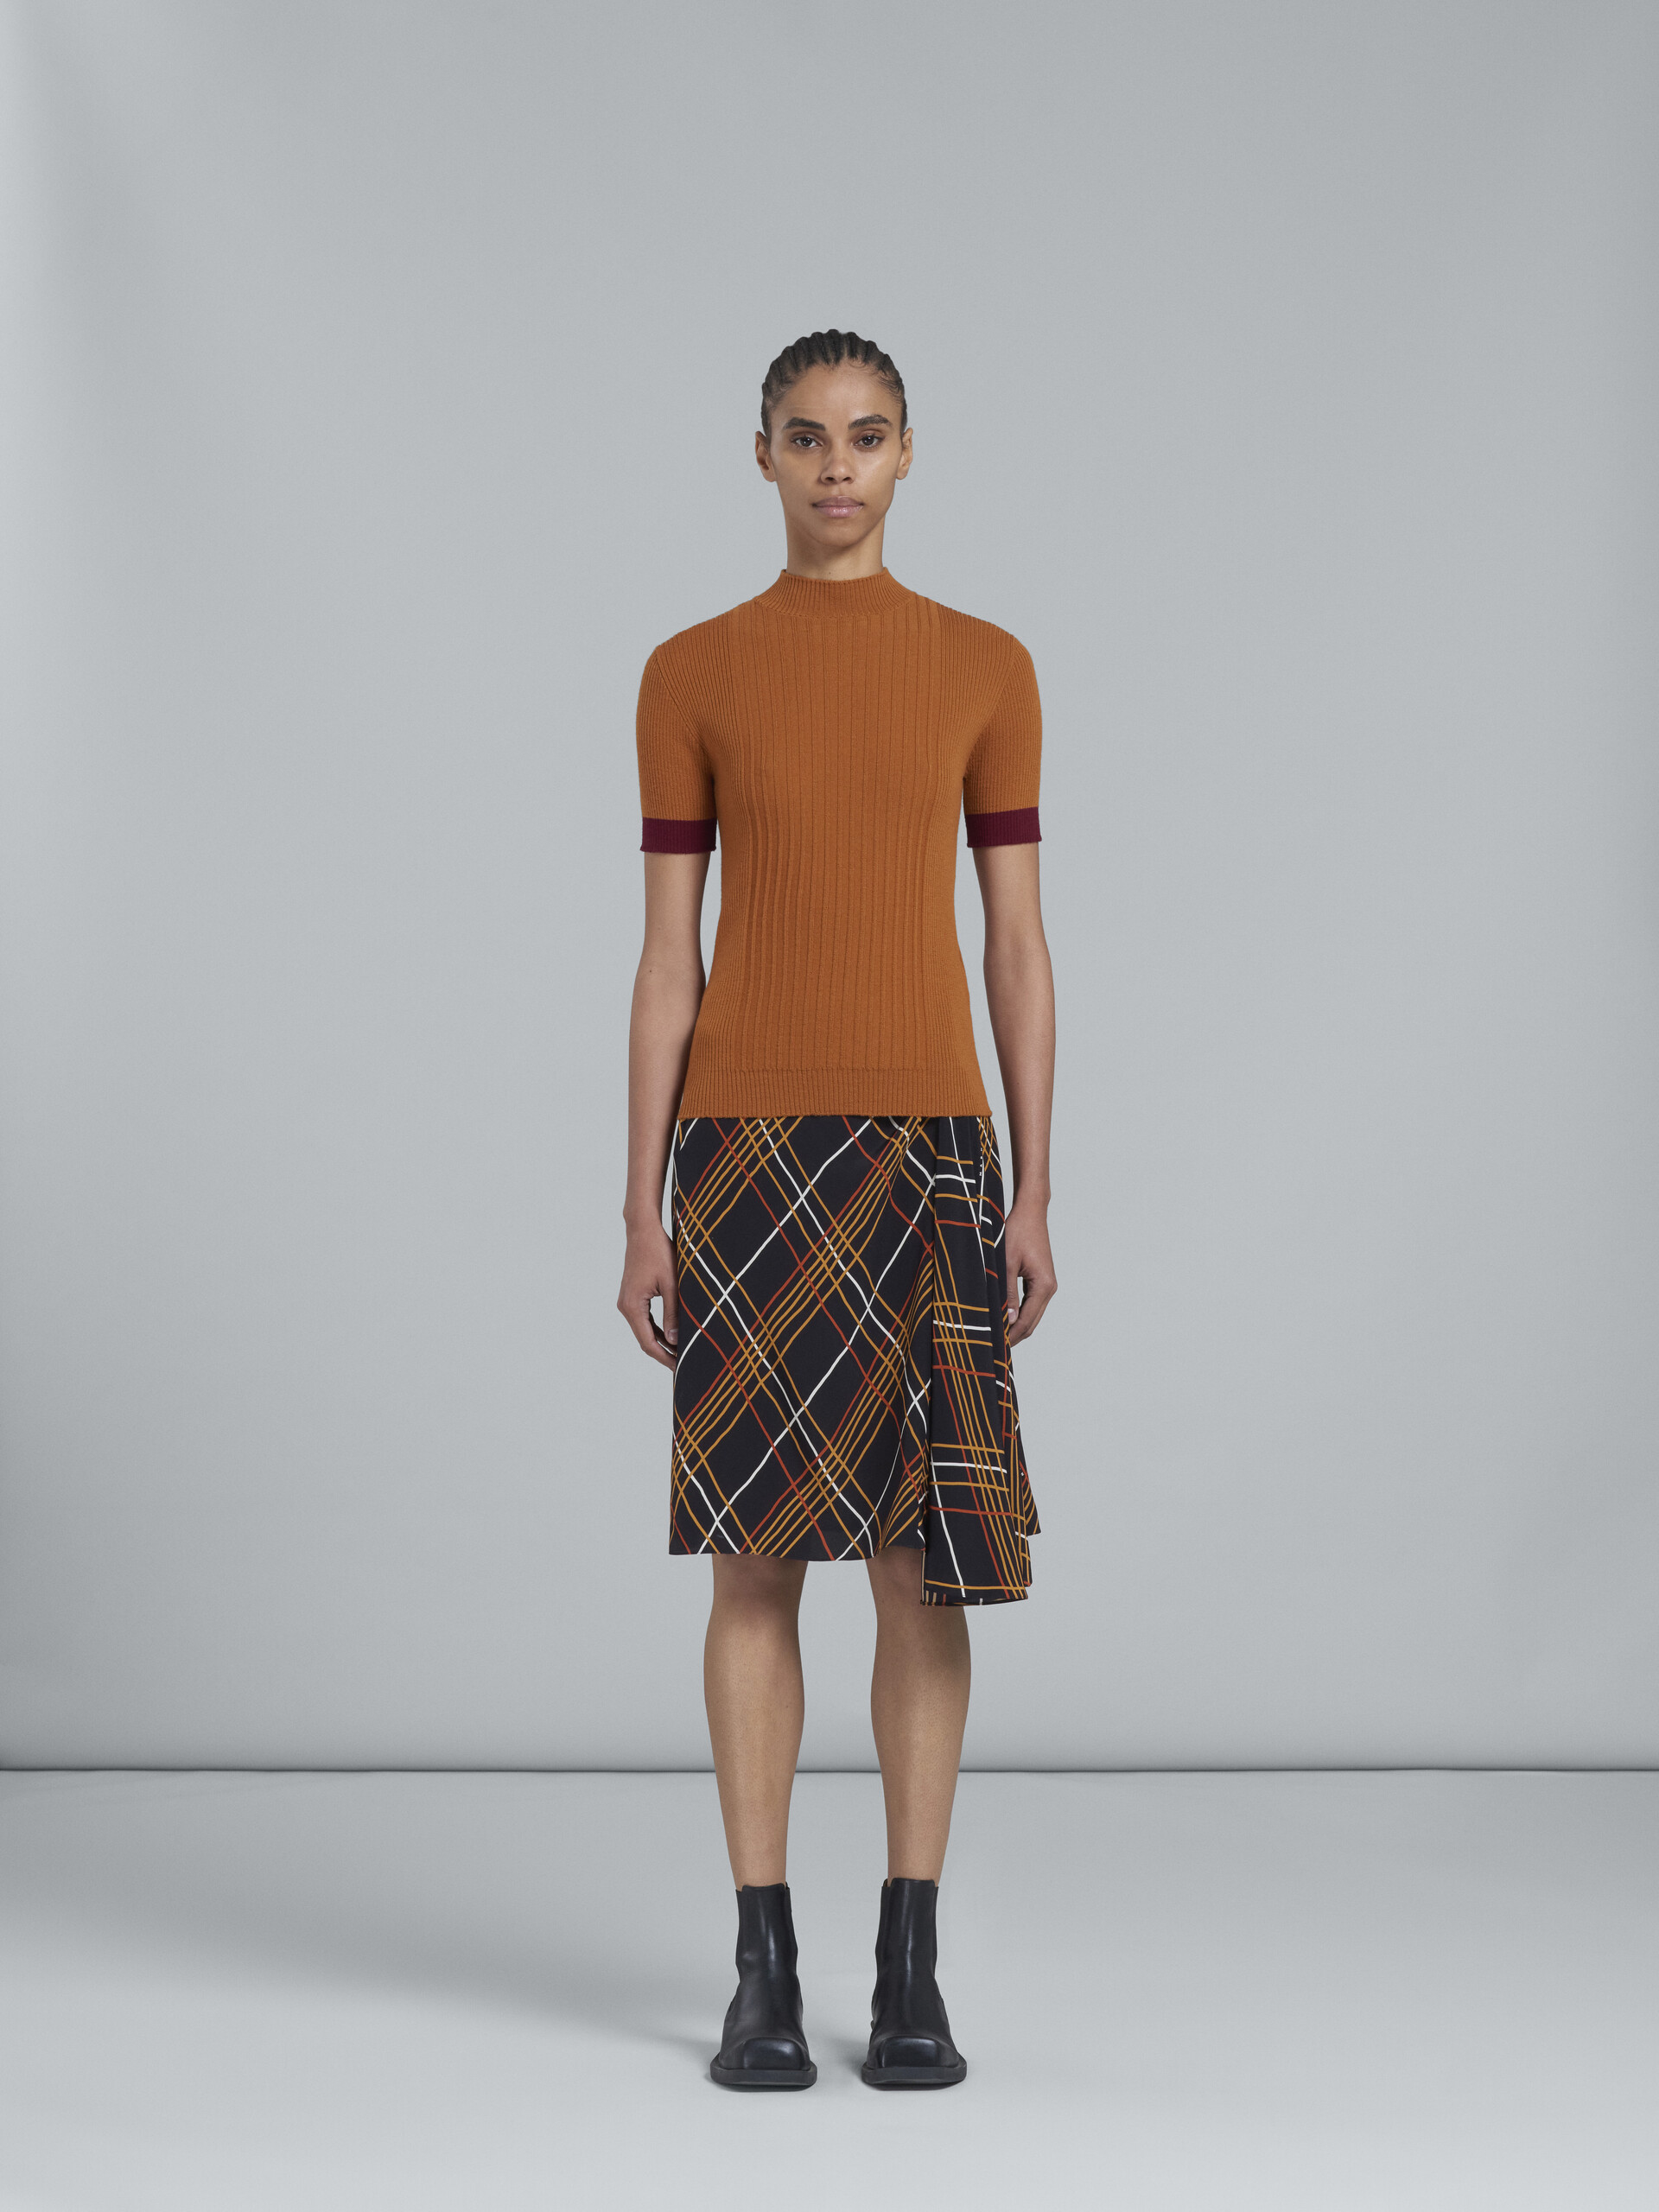 Wild Roads print skirt with godet hem - Skirts - Image 2